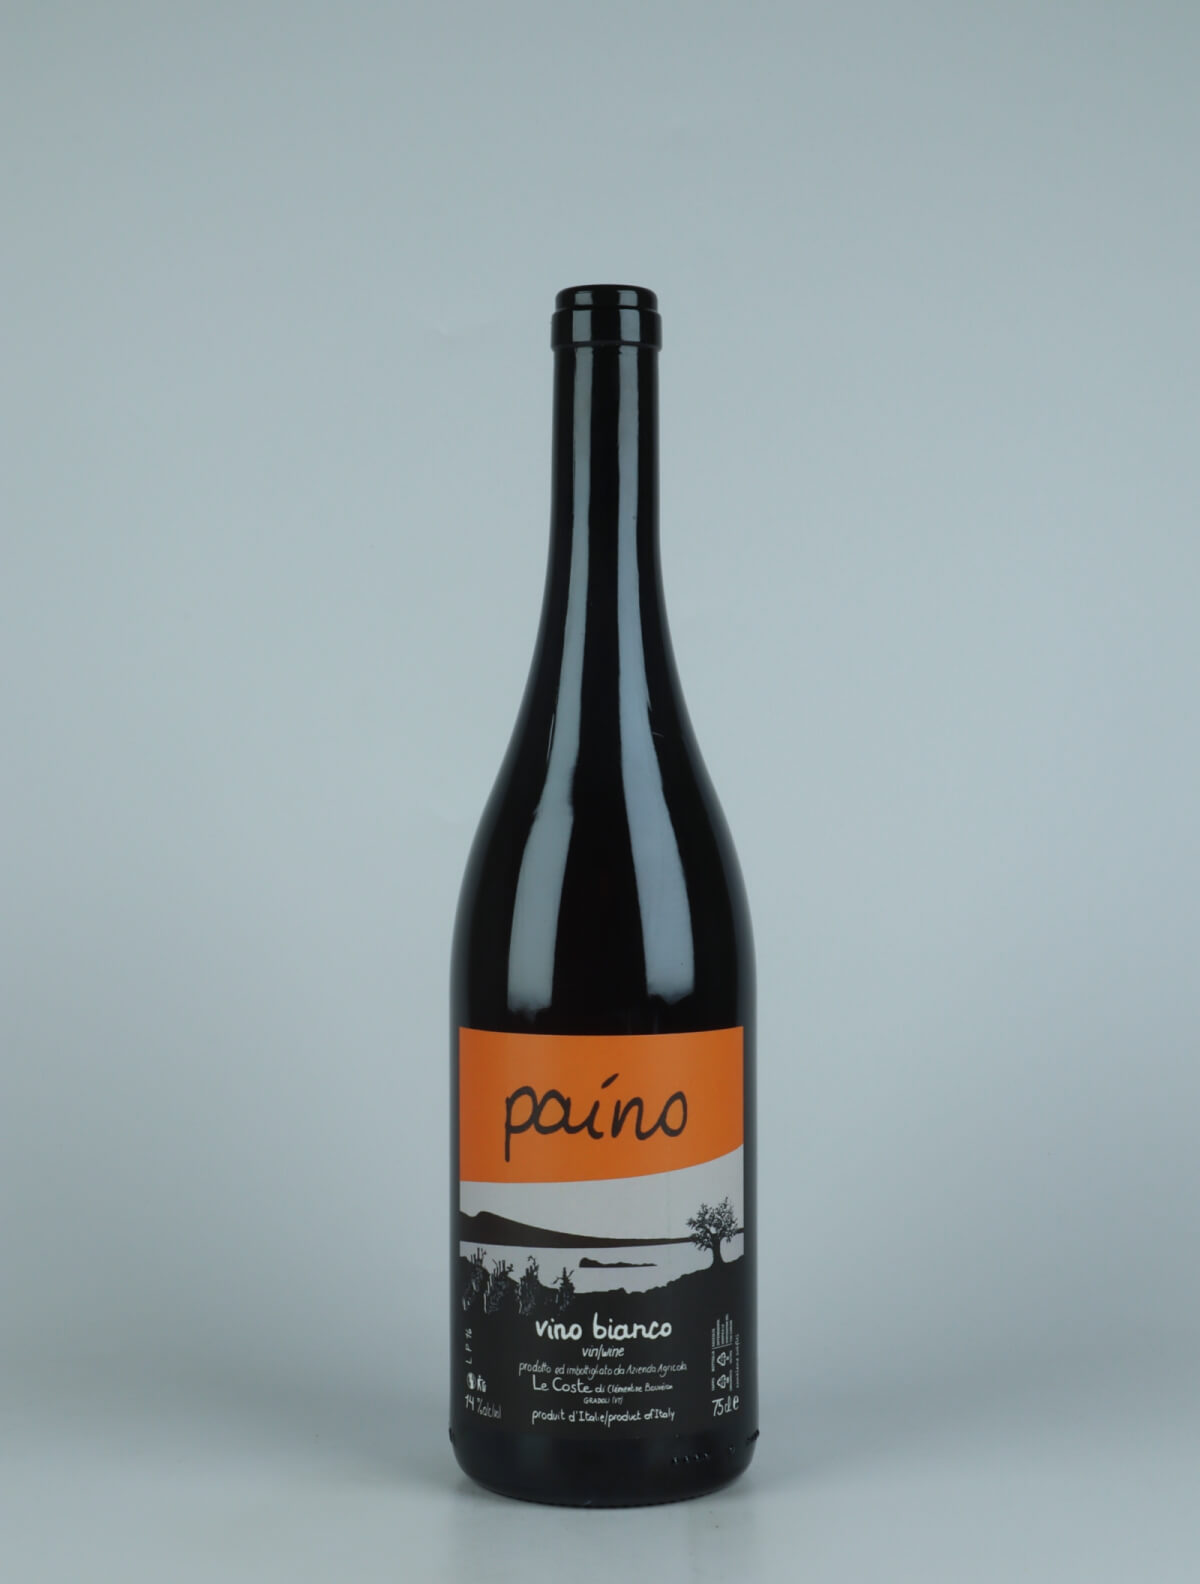 En flaske 2016 Paino Bianco Orange vin fra Le Coste, Lazio i Italien